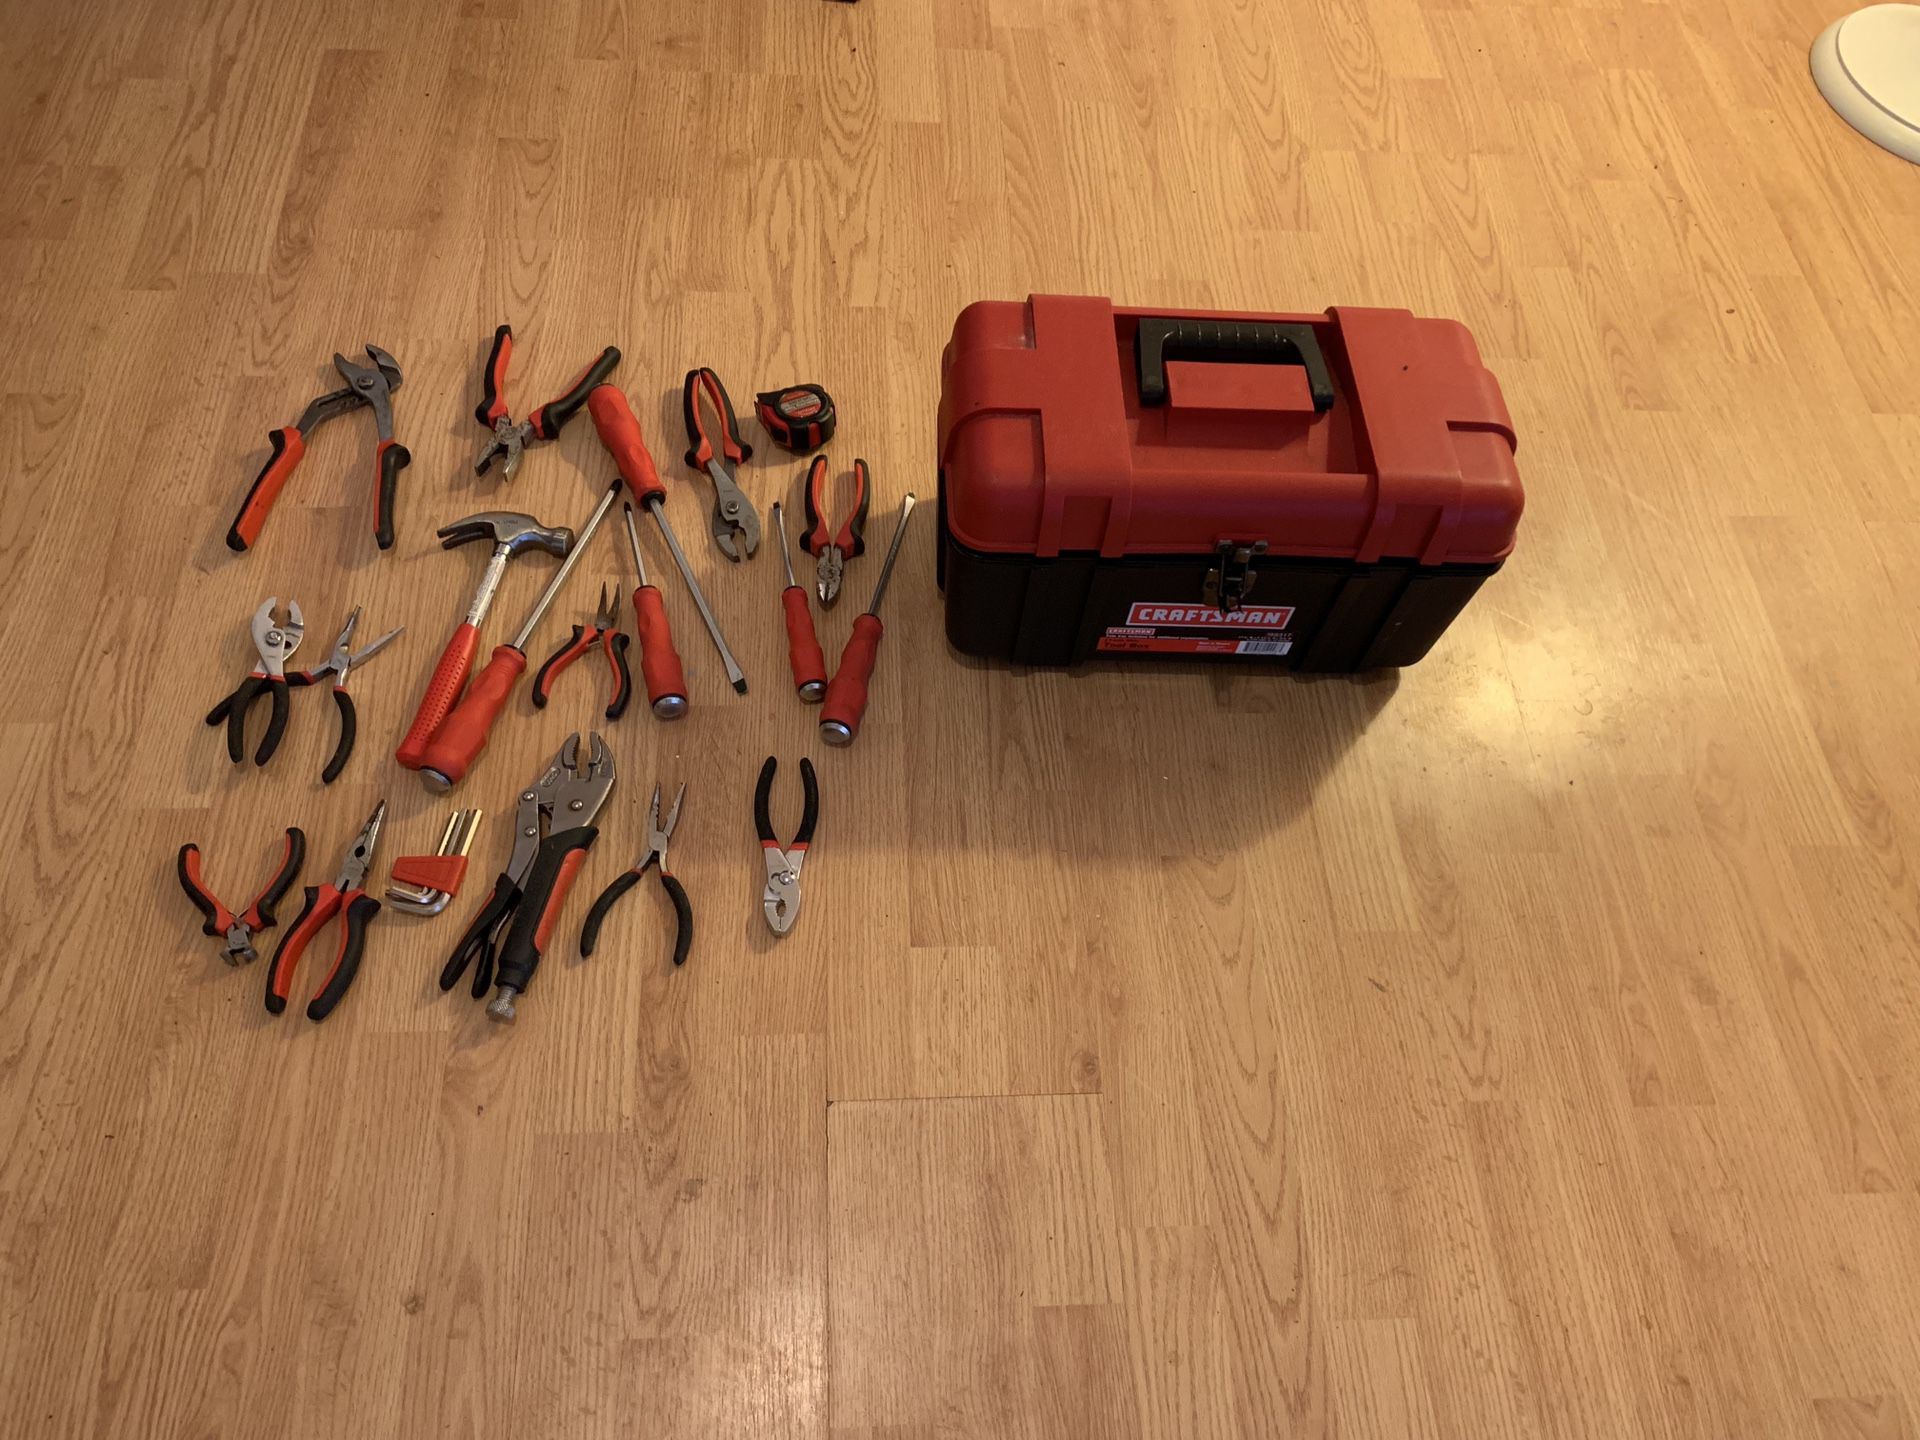 Craftsman tool box complete w tools